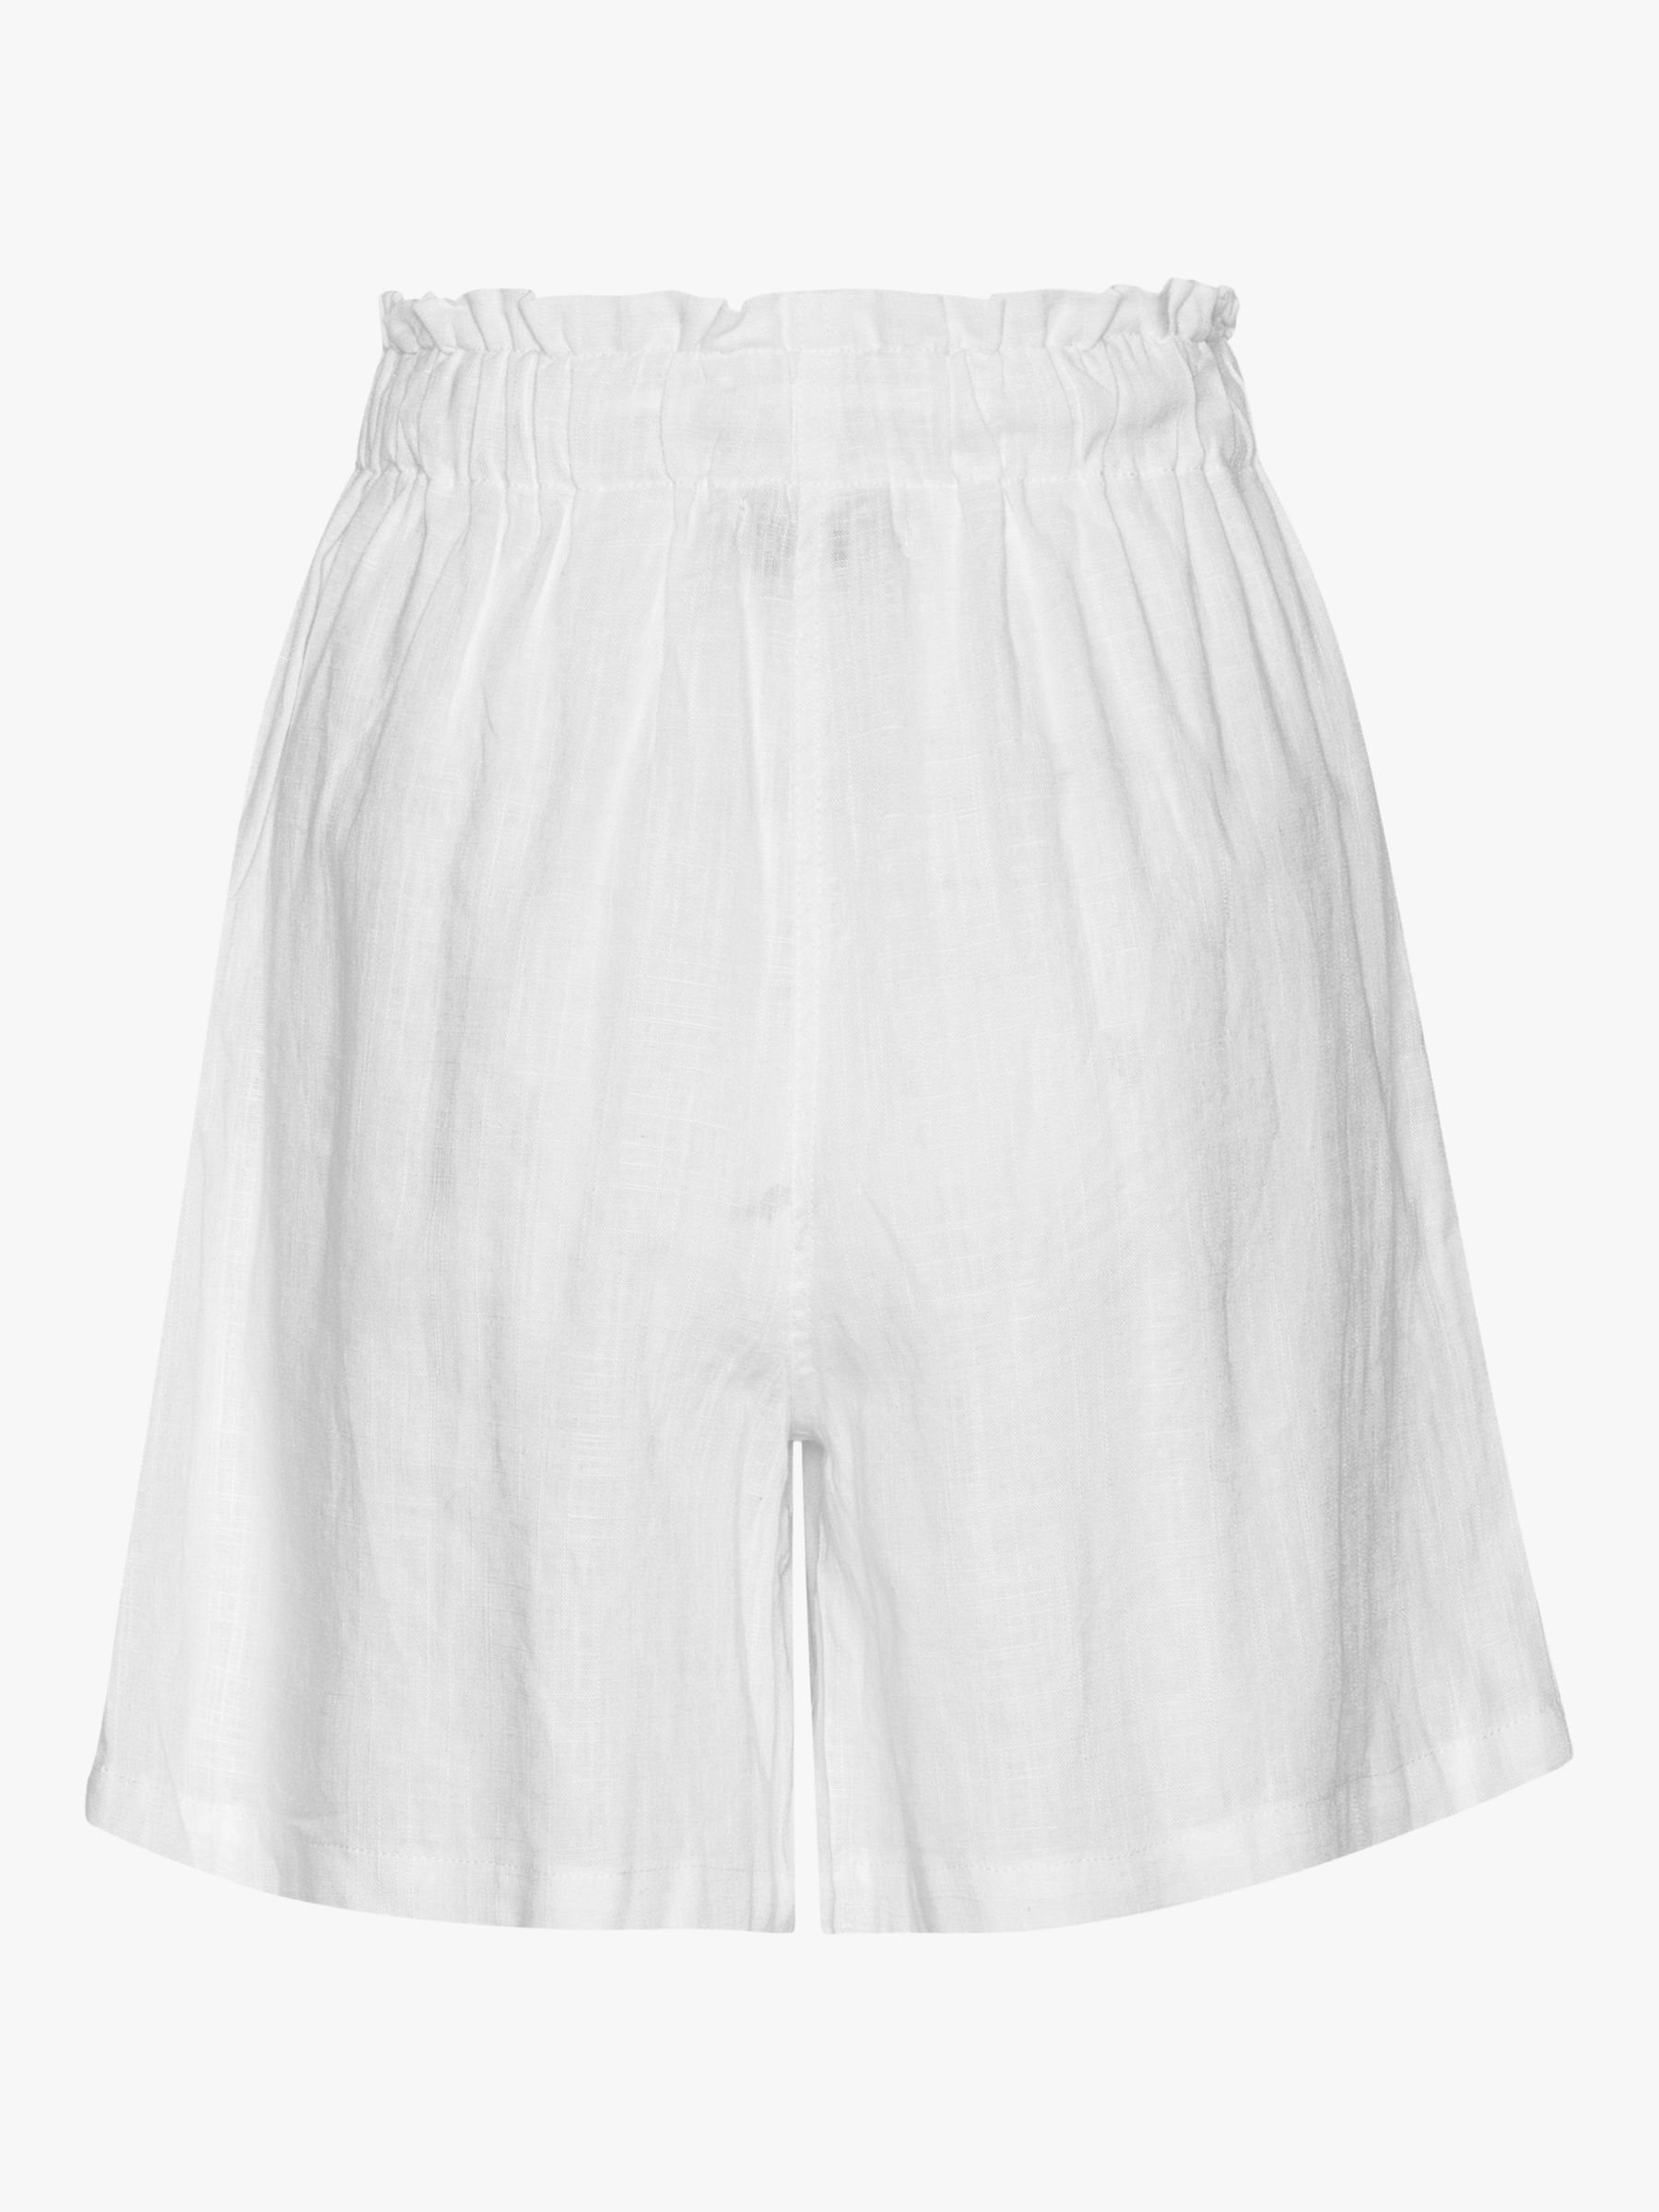 A-VIEW Lerke Linen Blend Shorts, White, 8